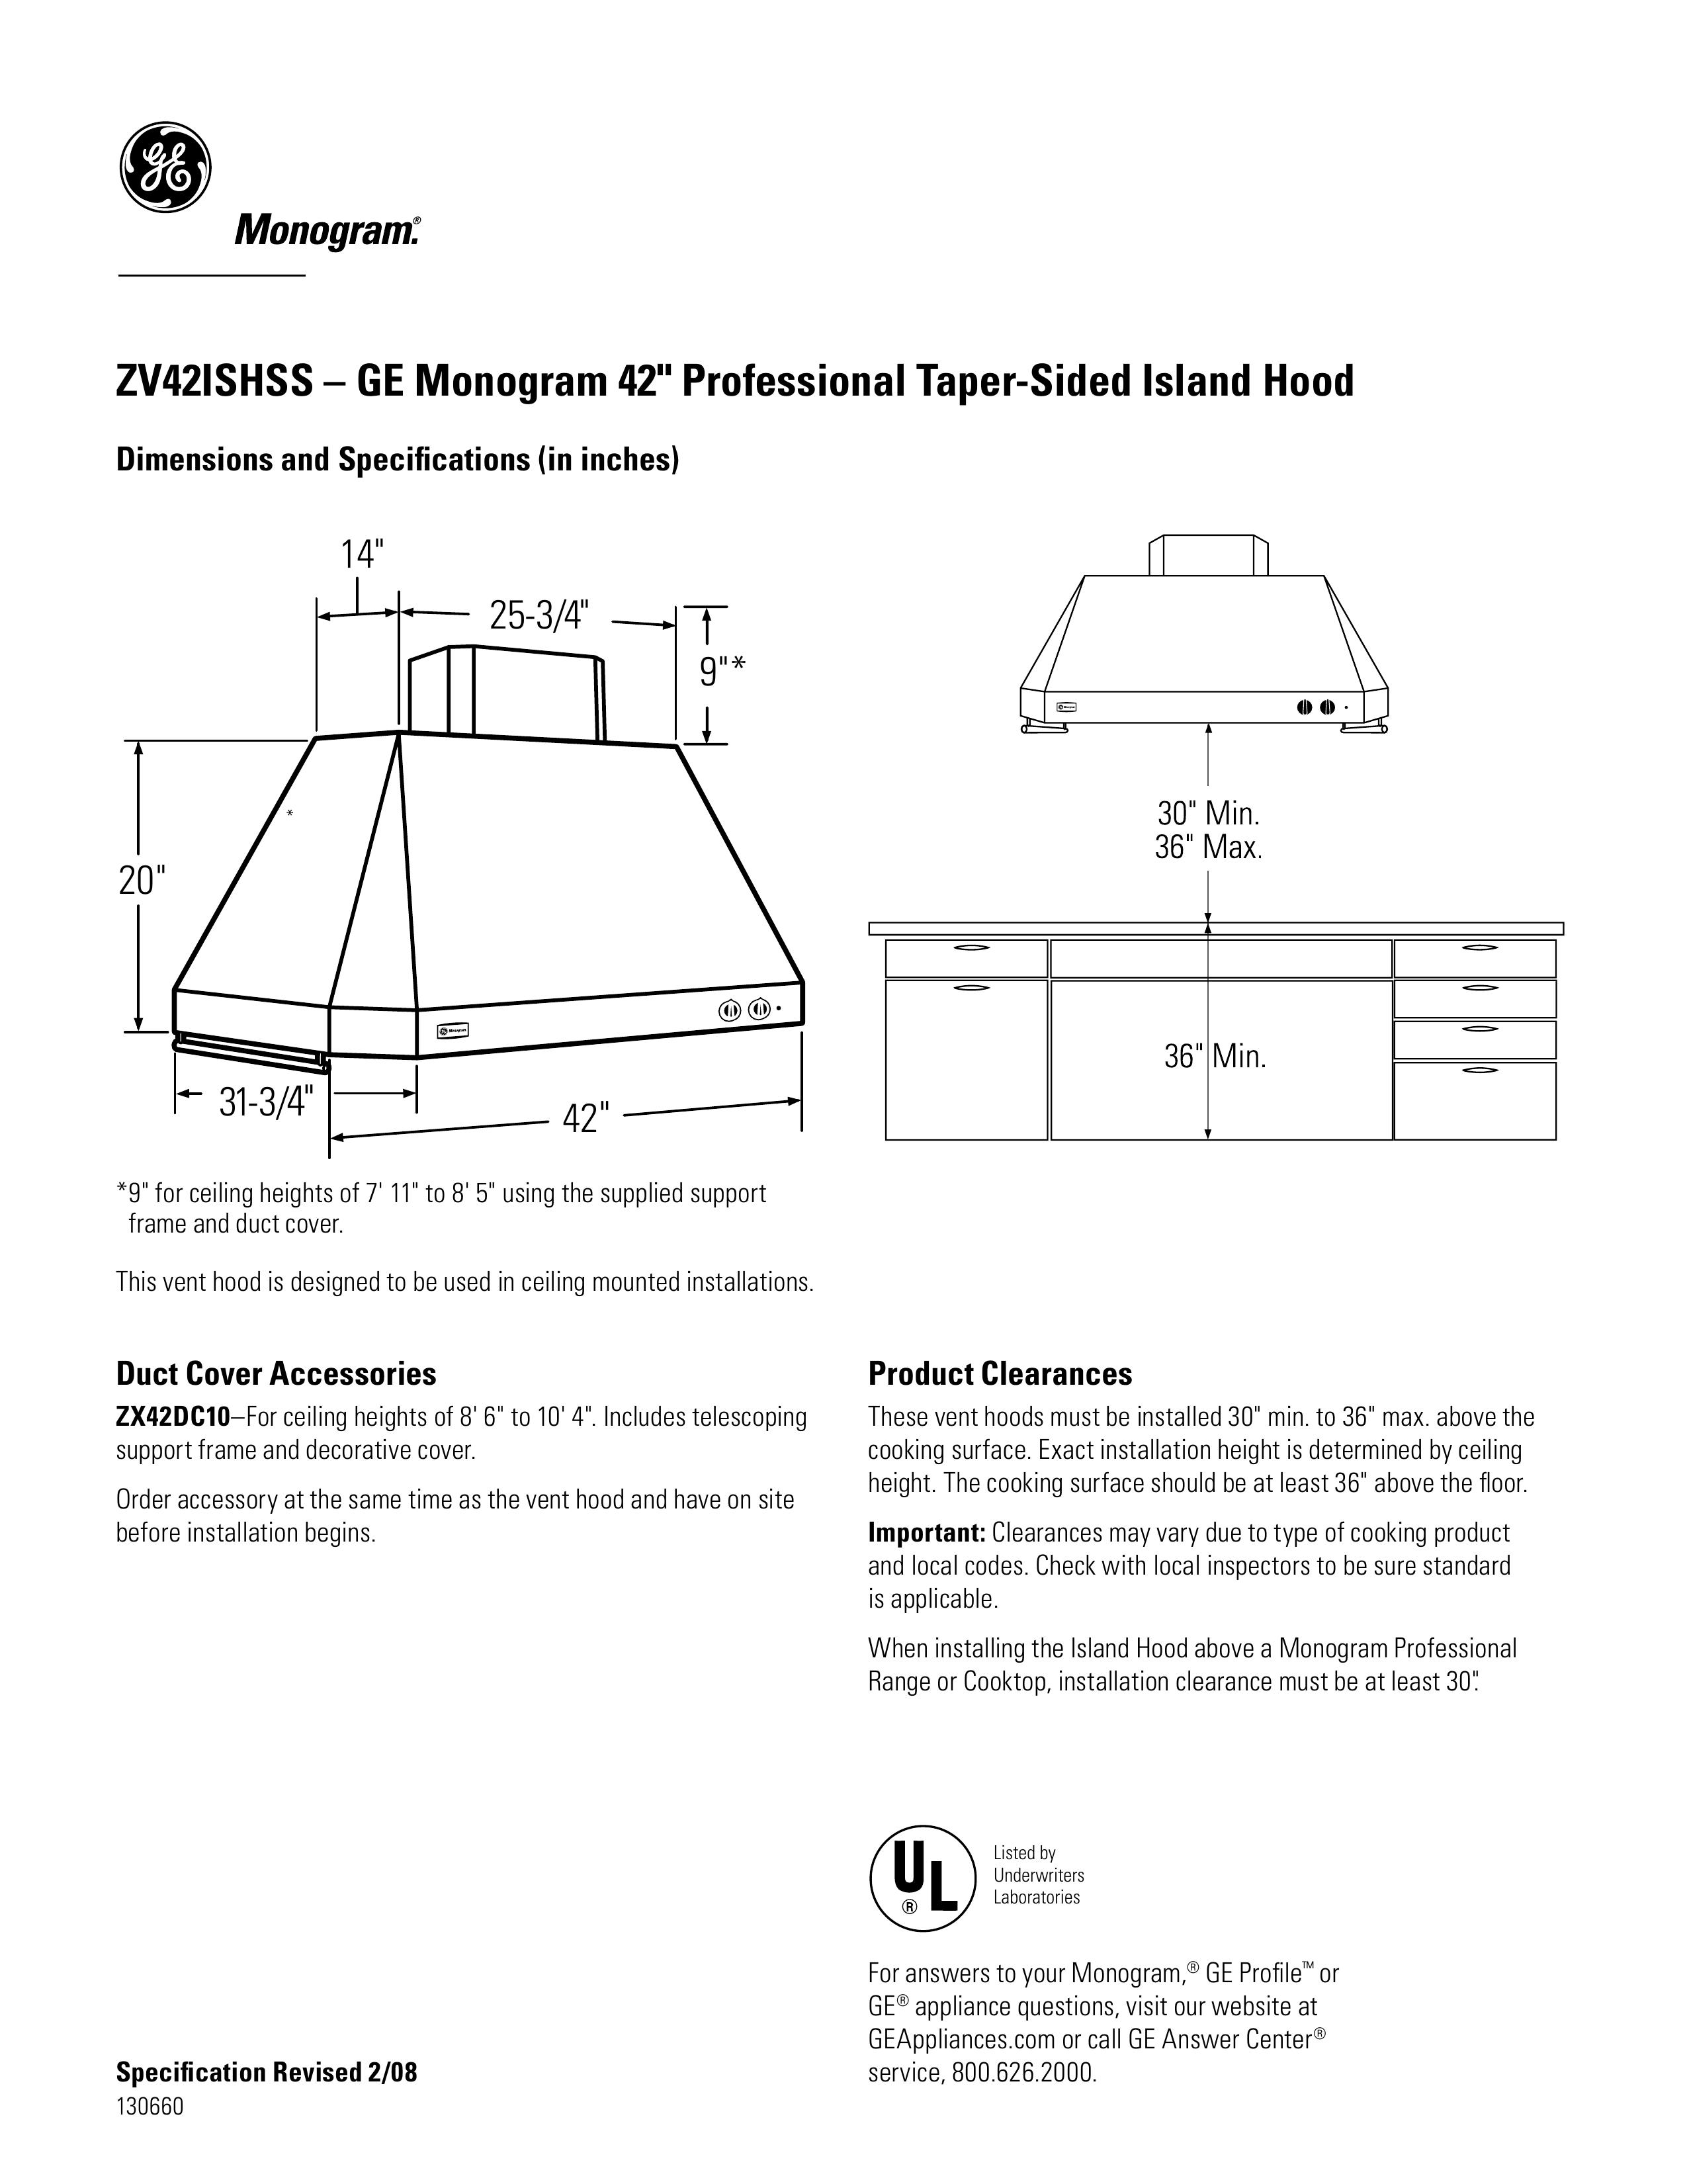 GE Monogram ZX42DC10 Ventilation Hood User Manual